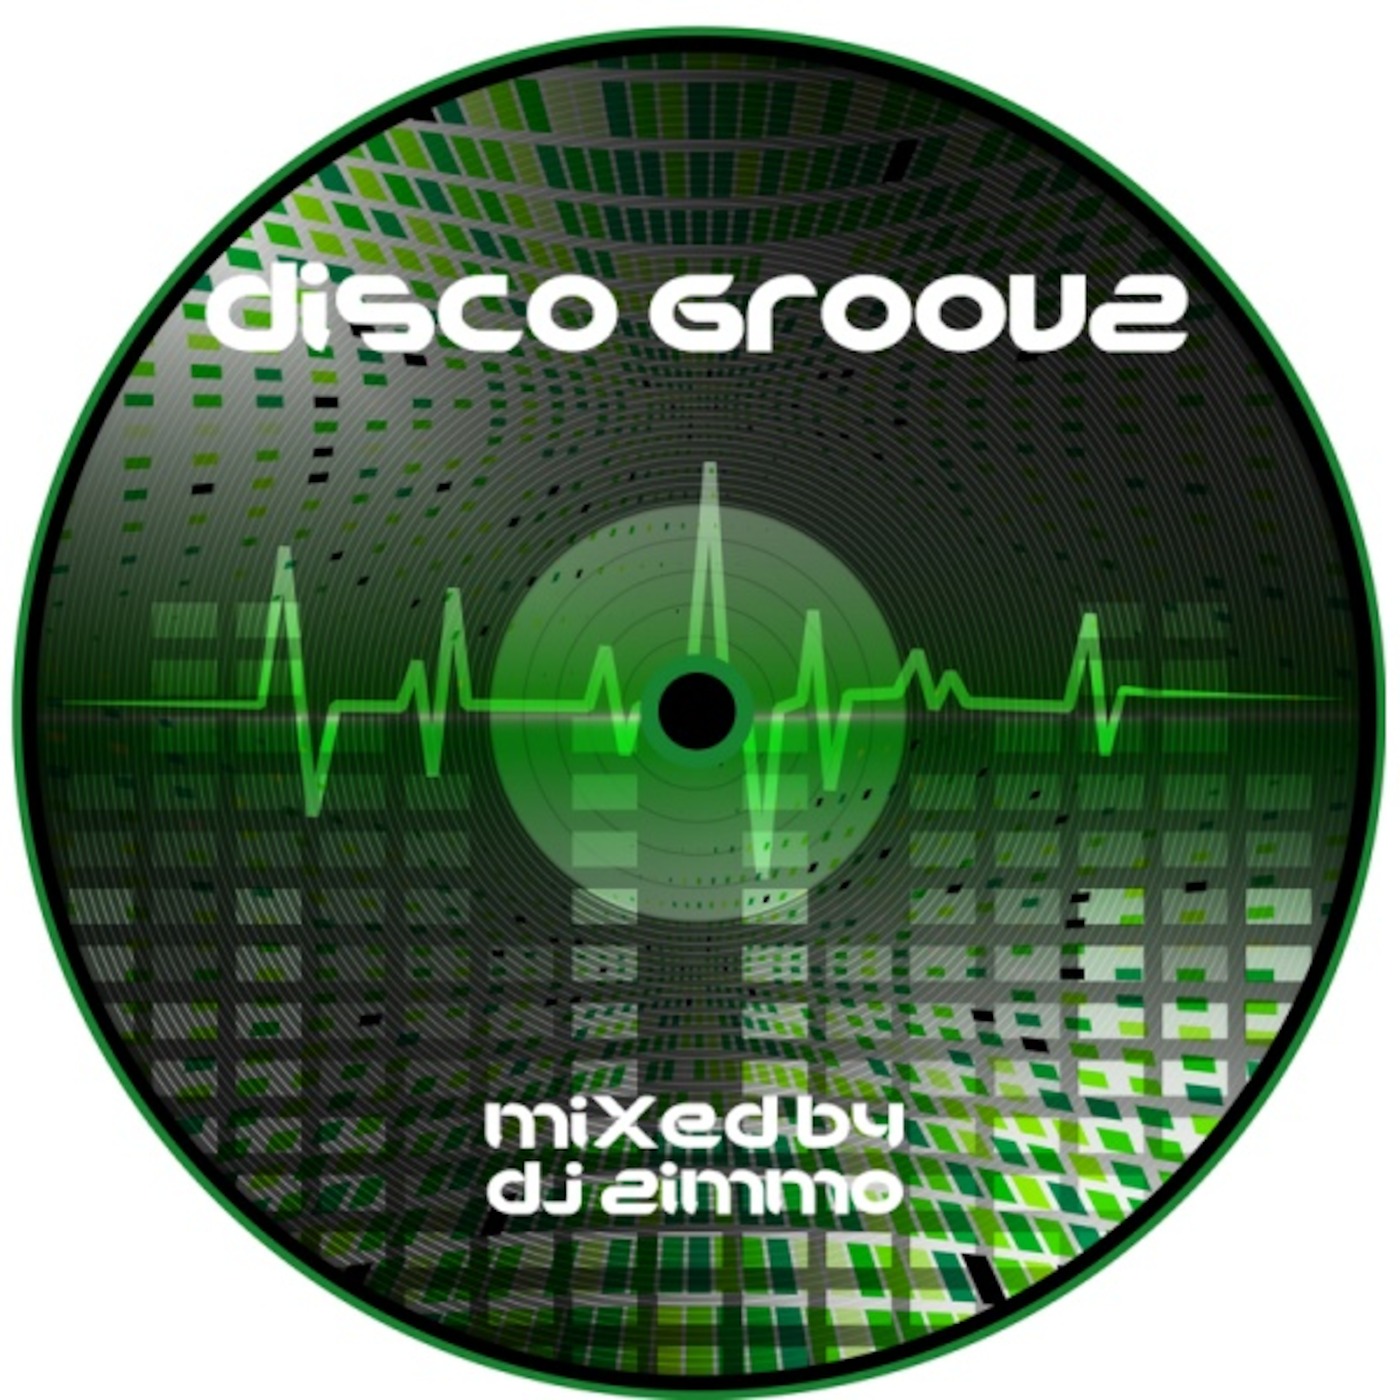 Disco Groovz - December 2011